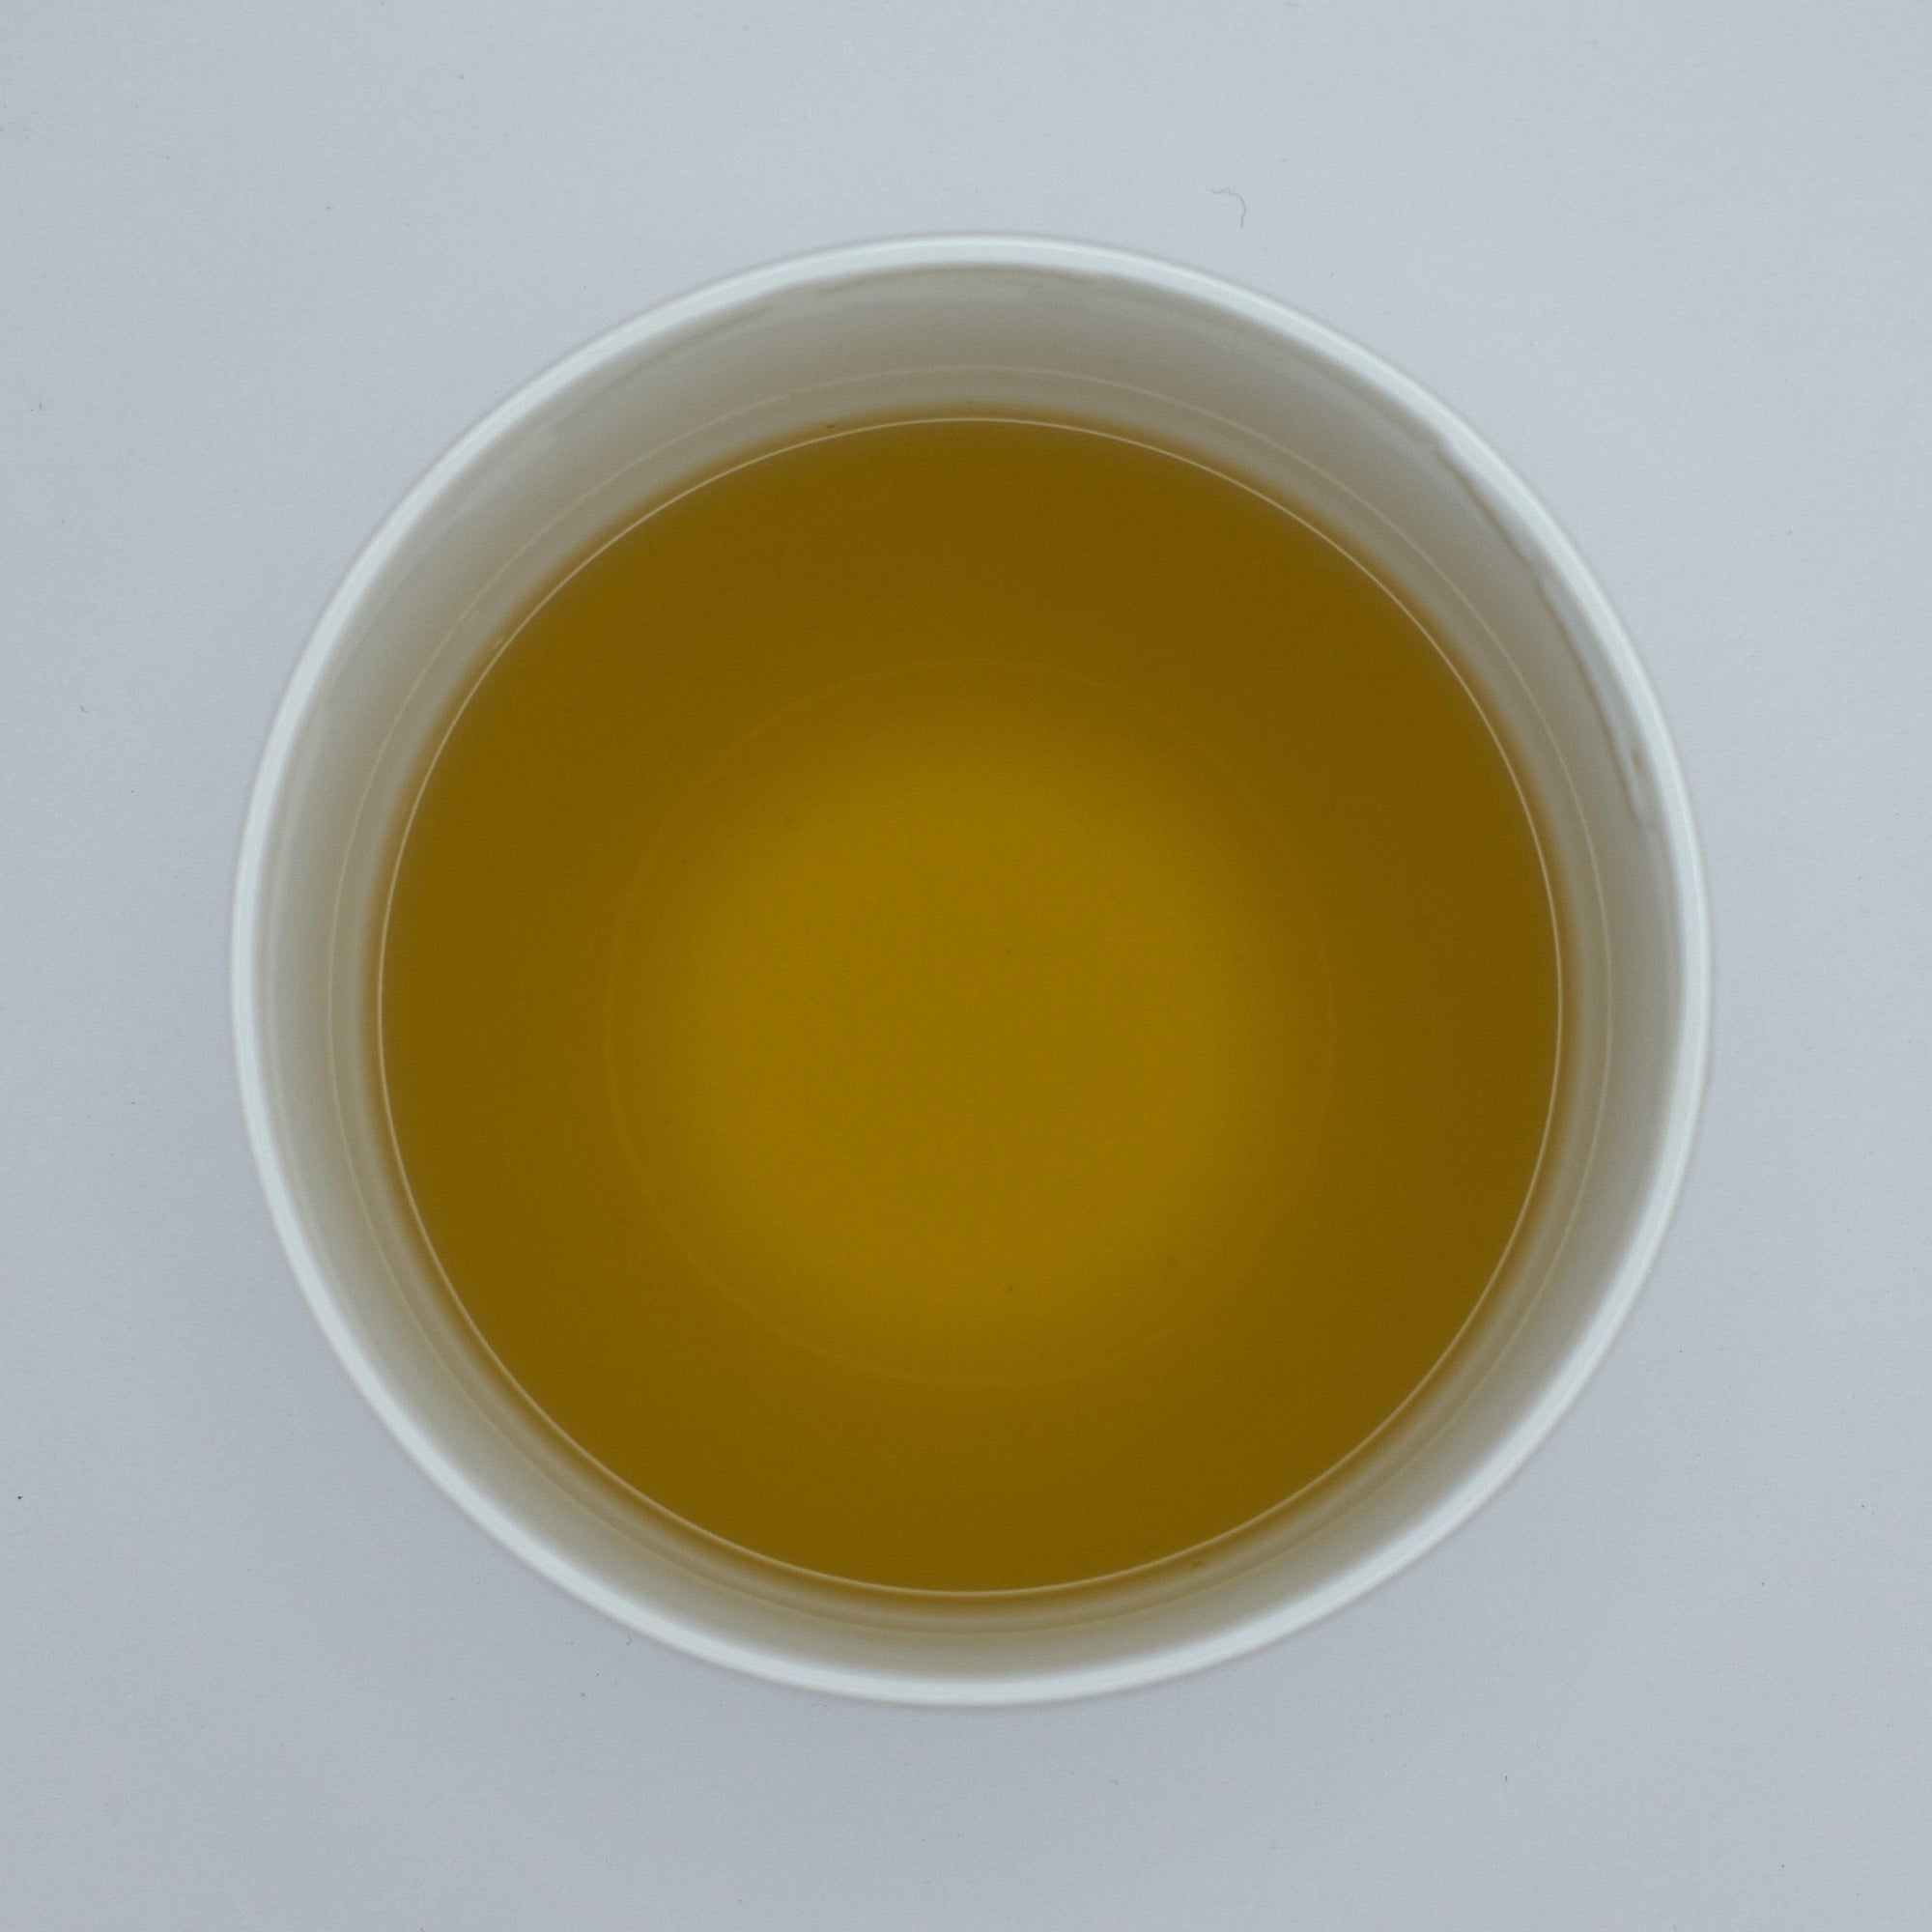 Morning Sickness - Organic - The Tea & Spice Shoppe